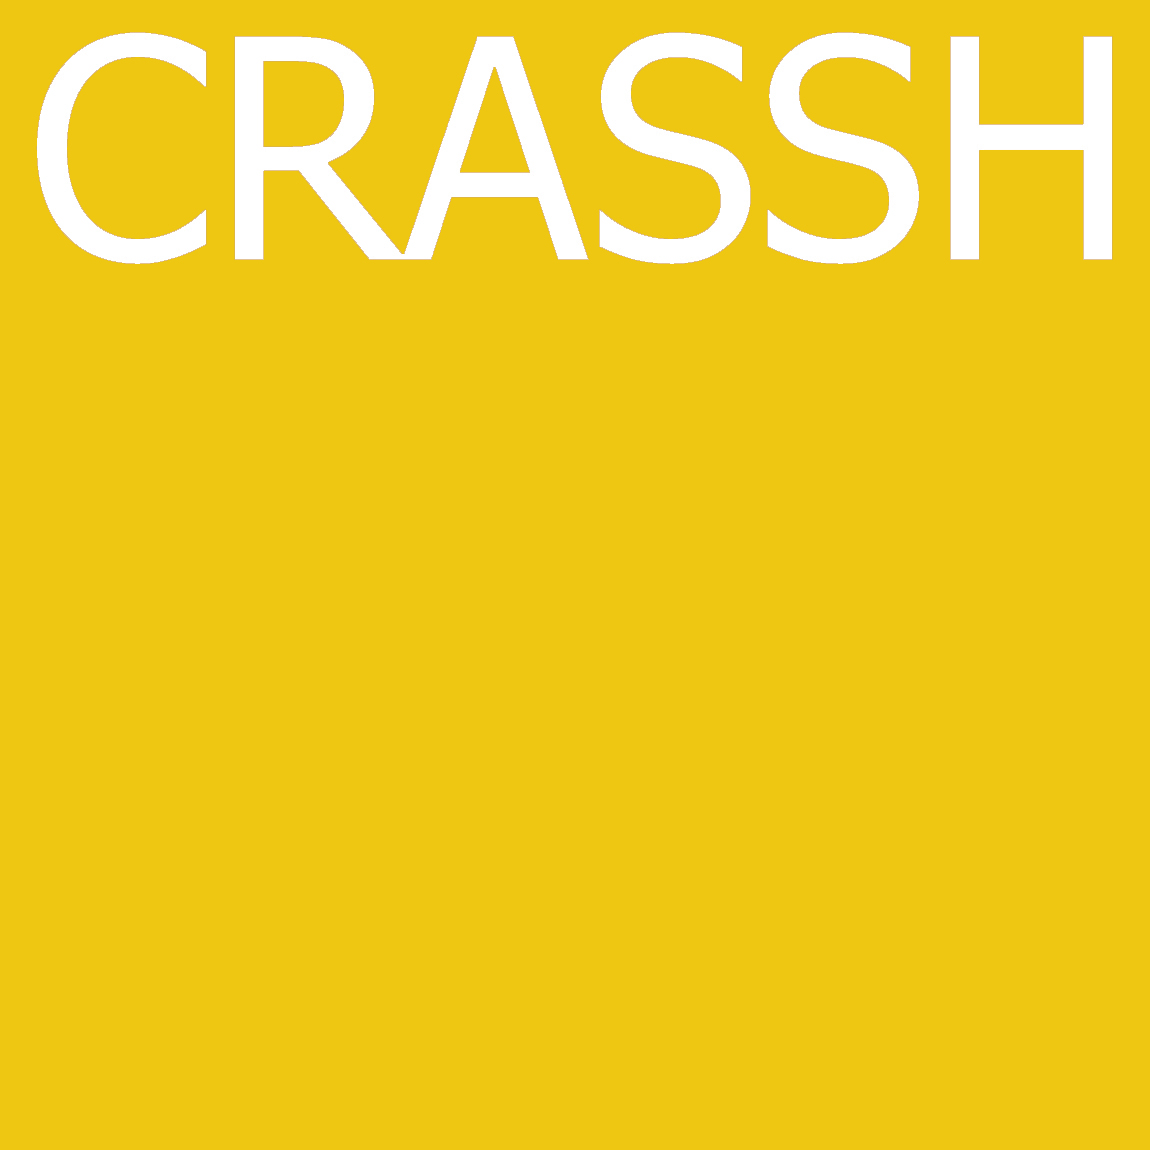 crassh yellow square logo